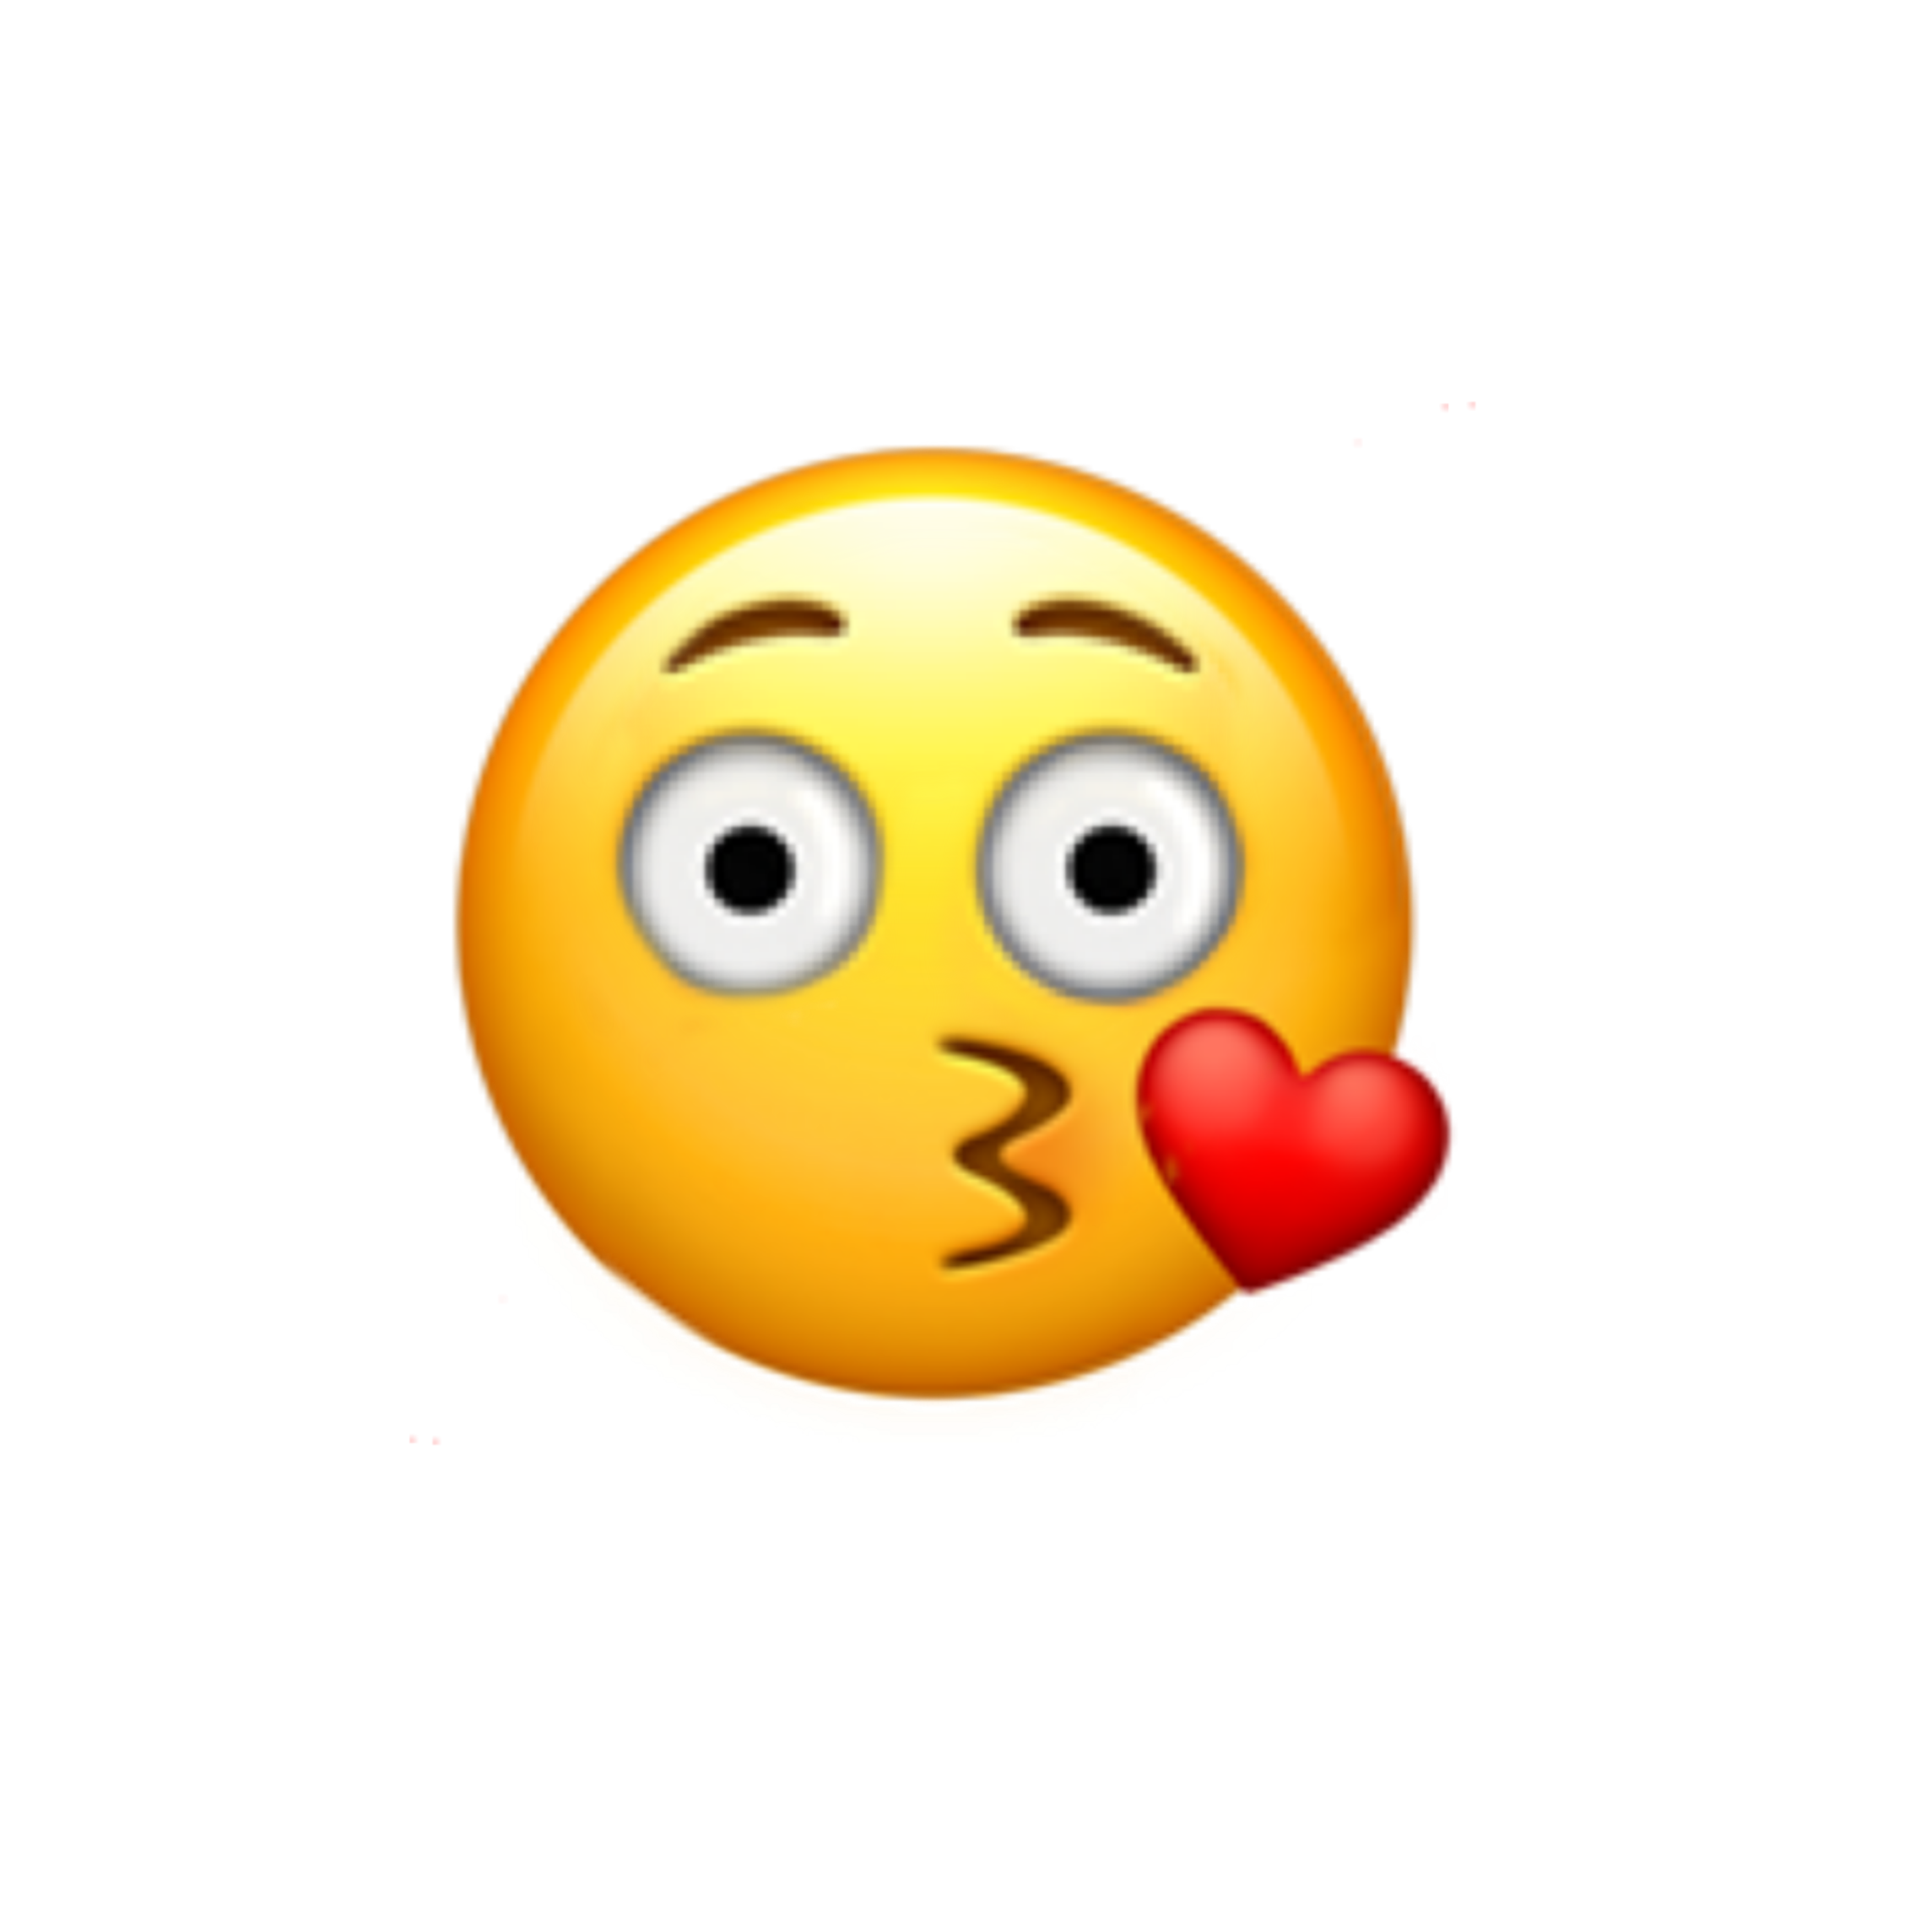 kiss emoji iphone mix remix freetoedit sticker by @veulos.